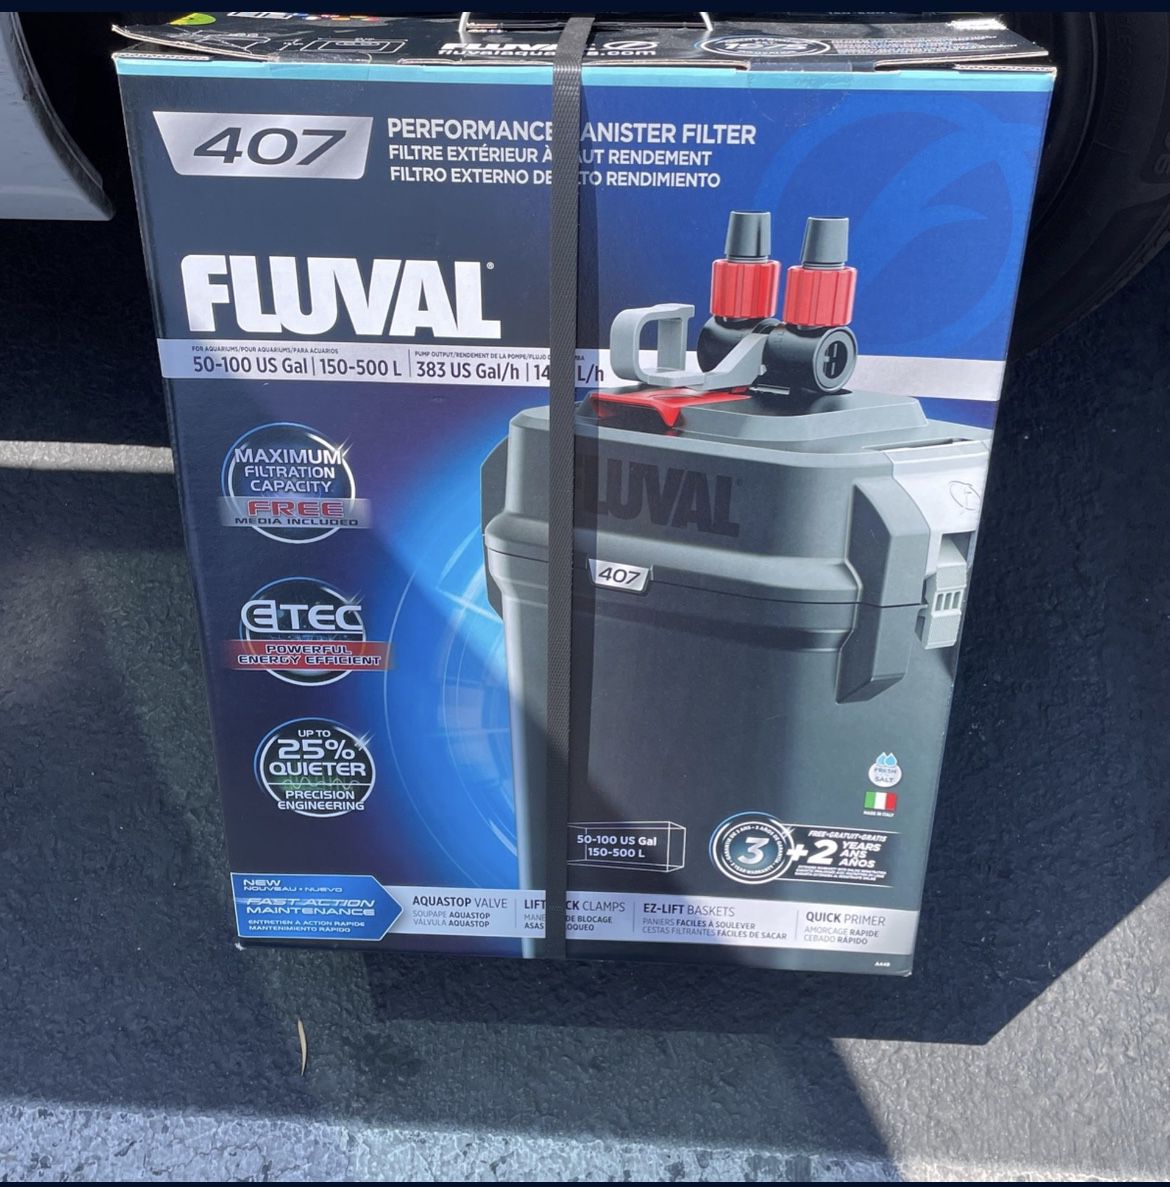 Fluval 407 Performance Canister Filter